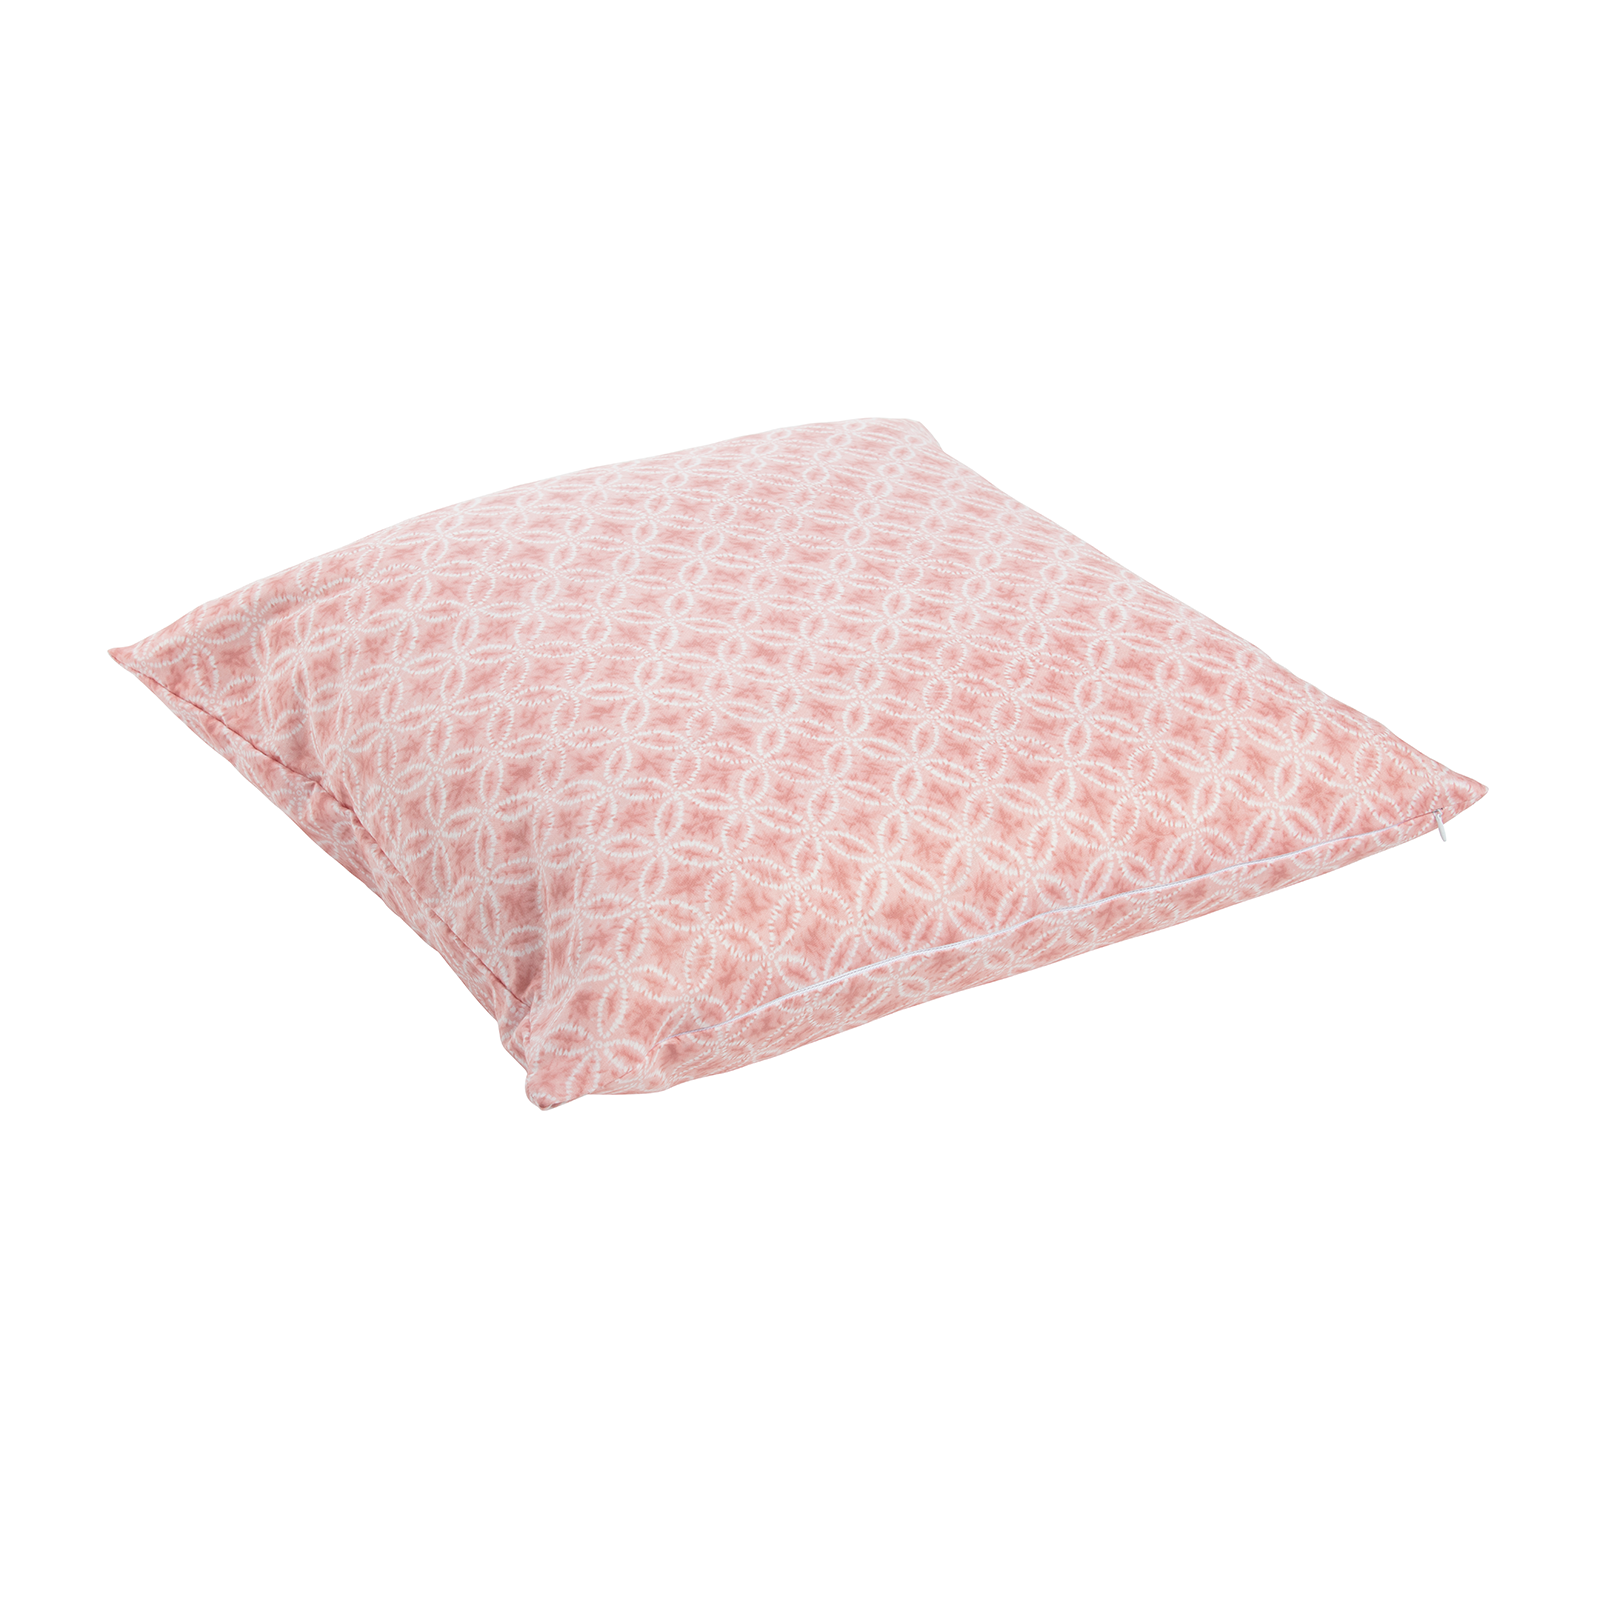 J-Life Taidai Pink Zabuton Floor Pillow